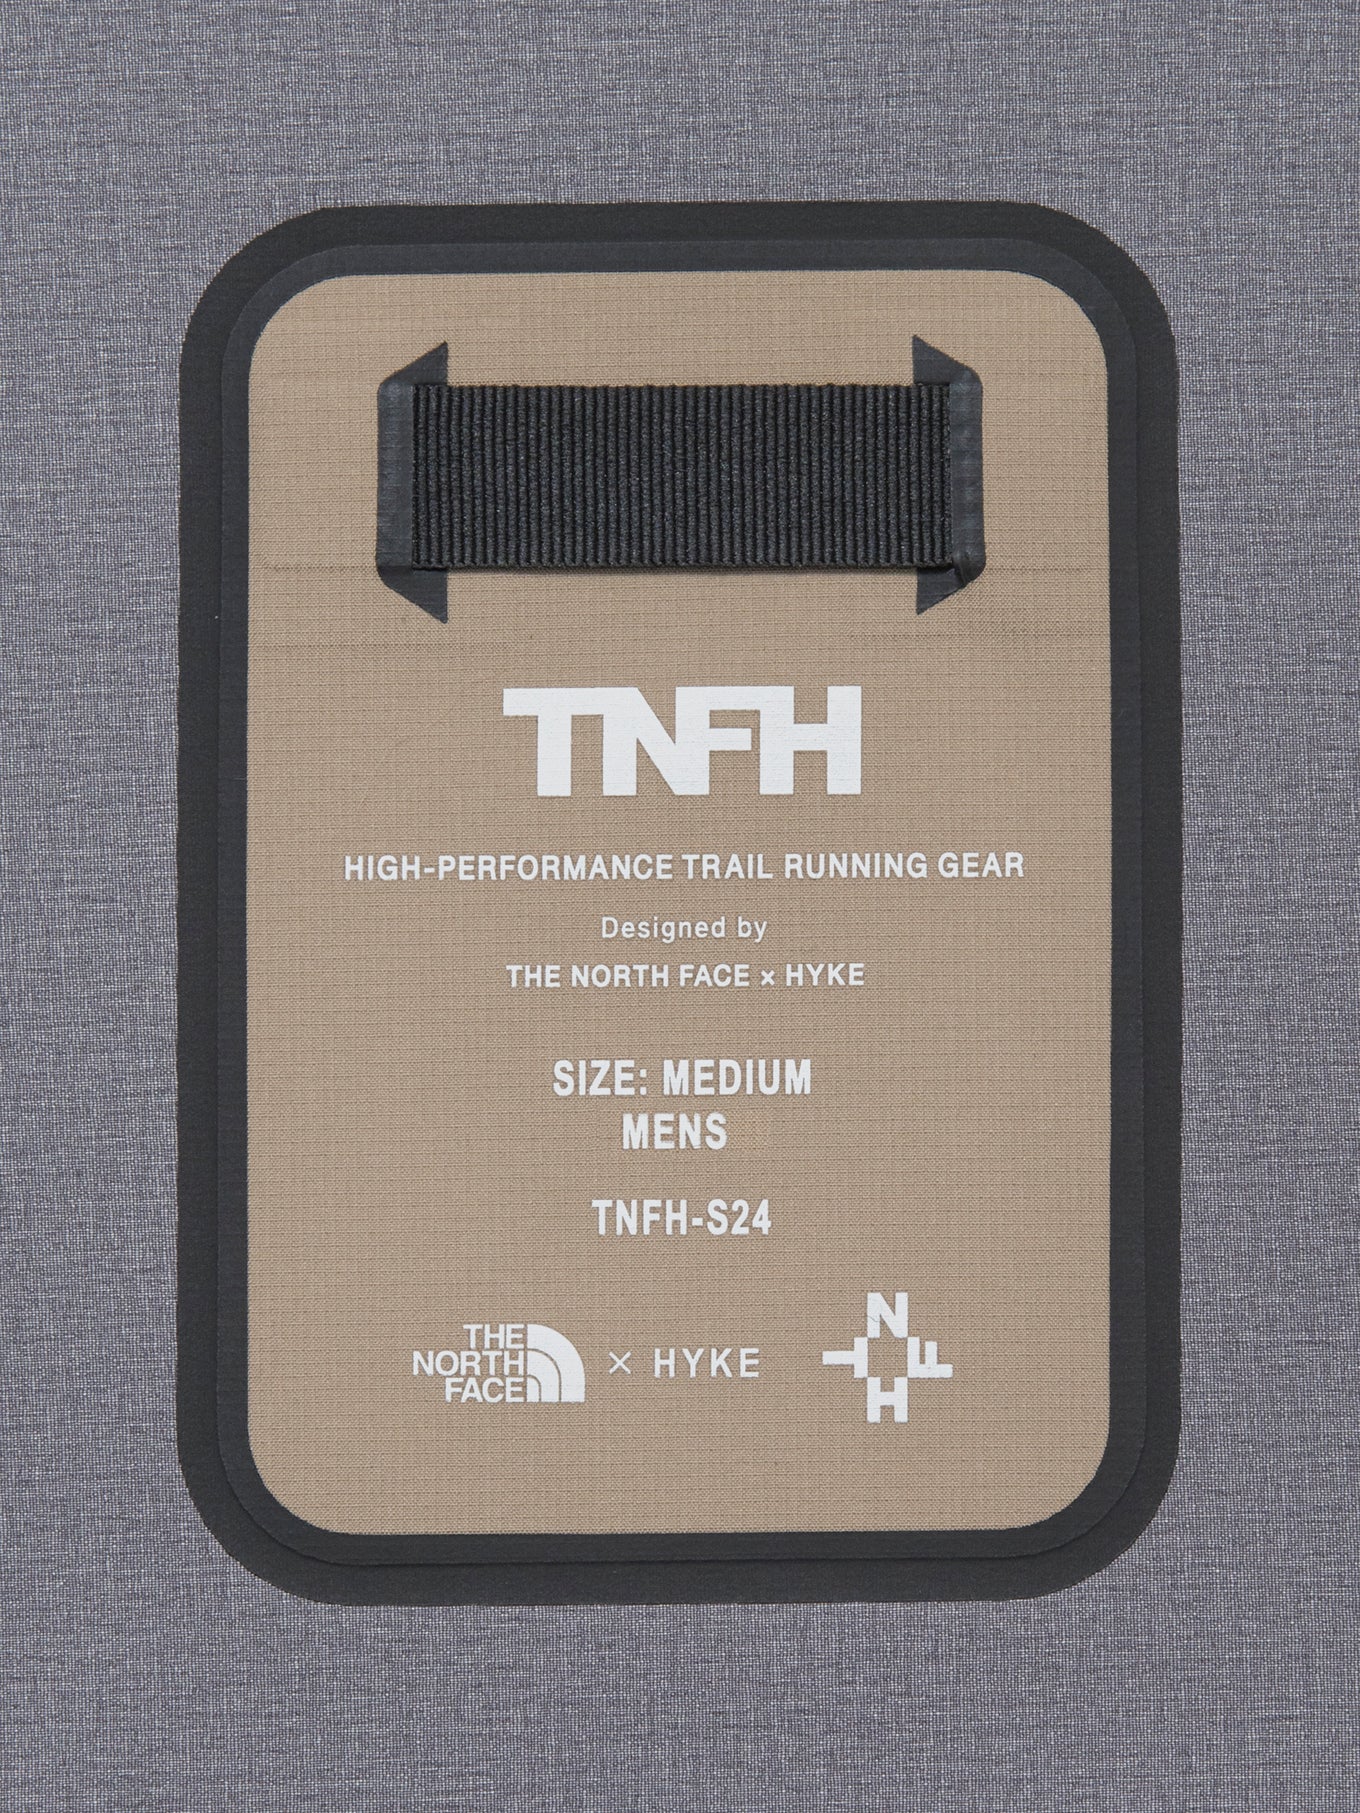 GTX Trail Jacket (Mens)<br>TNFH  THE NORTH FACE × HYKE